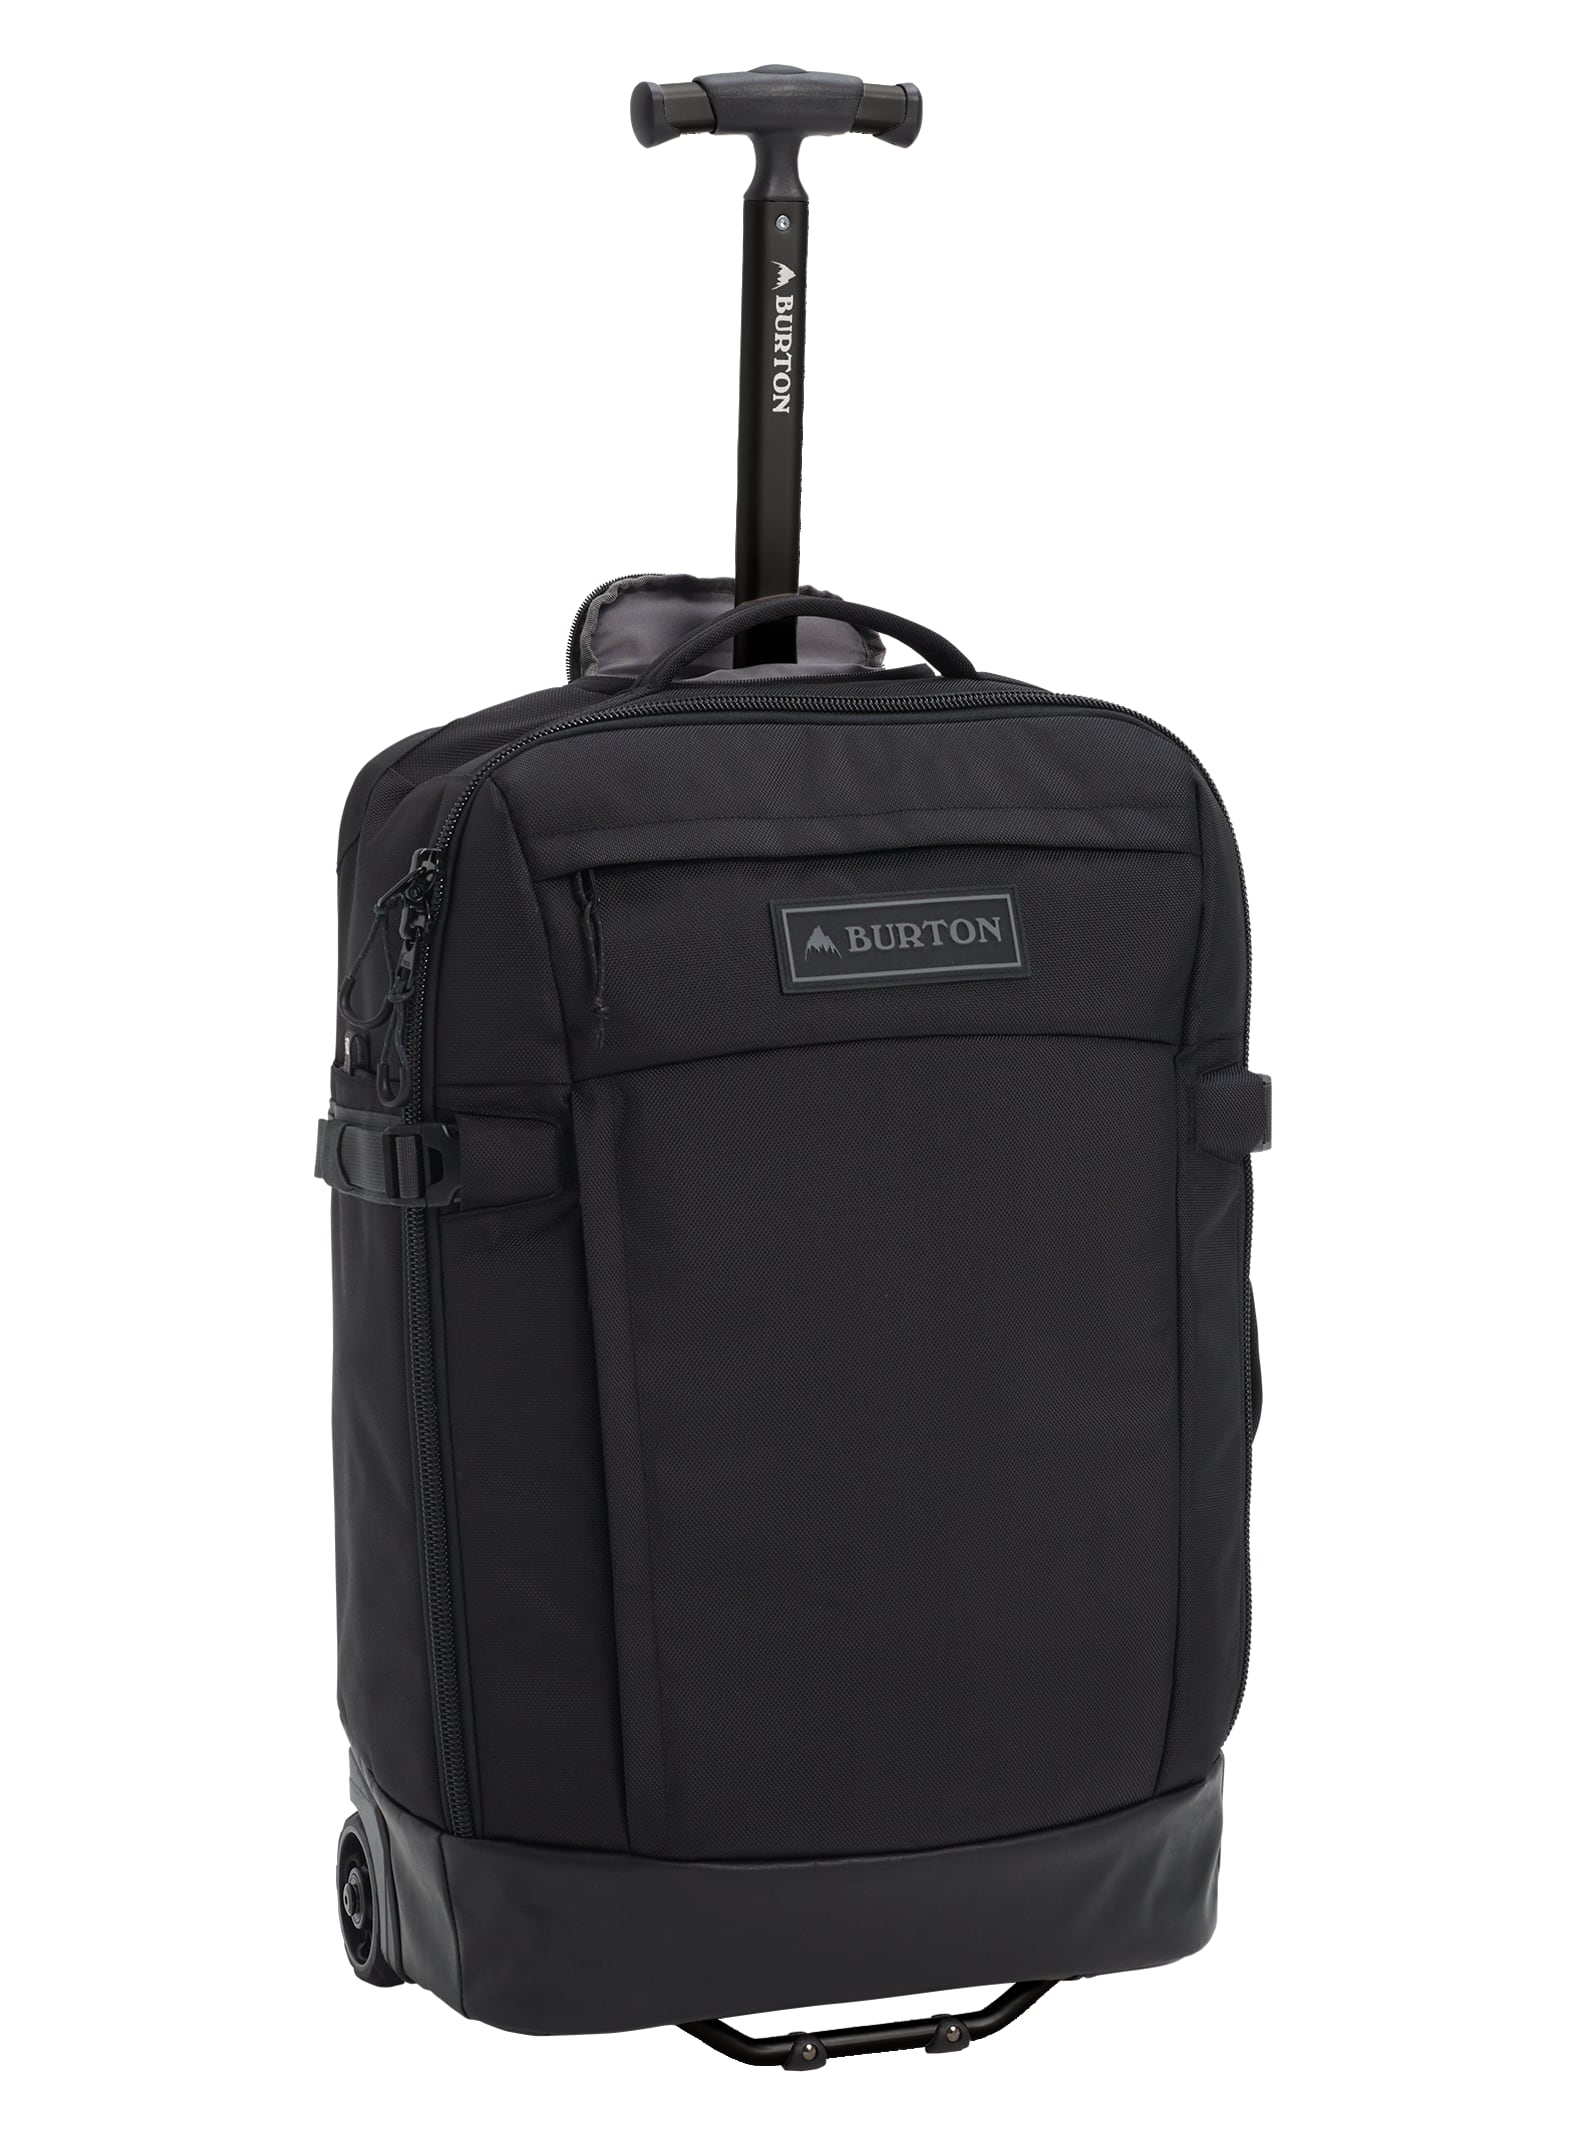 Burton Multipath 40L Carry-On Travel Bag | Burton.com Spring 2020 